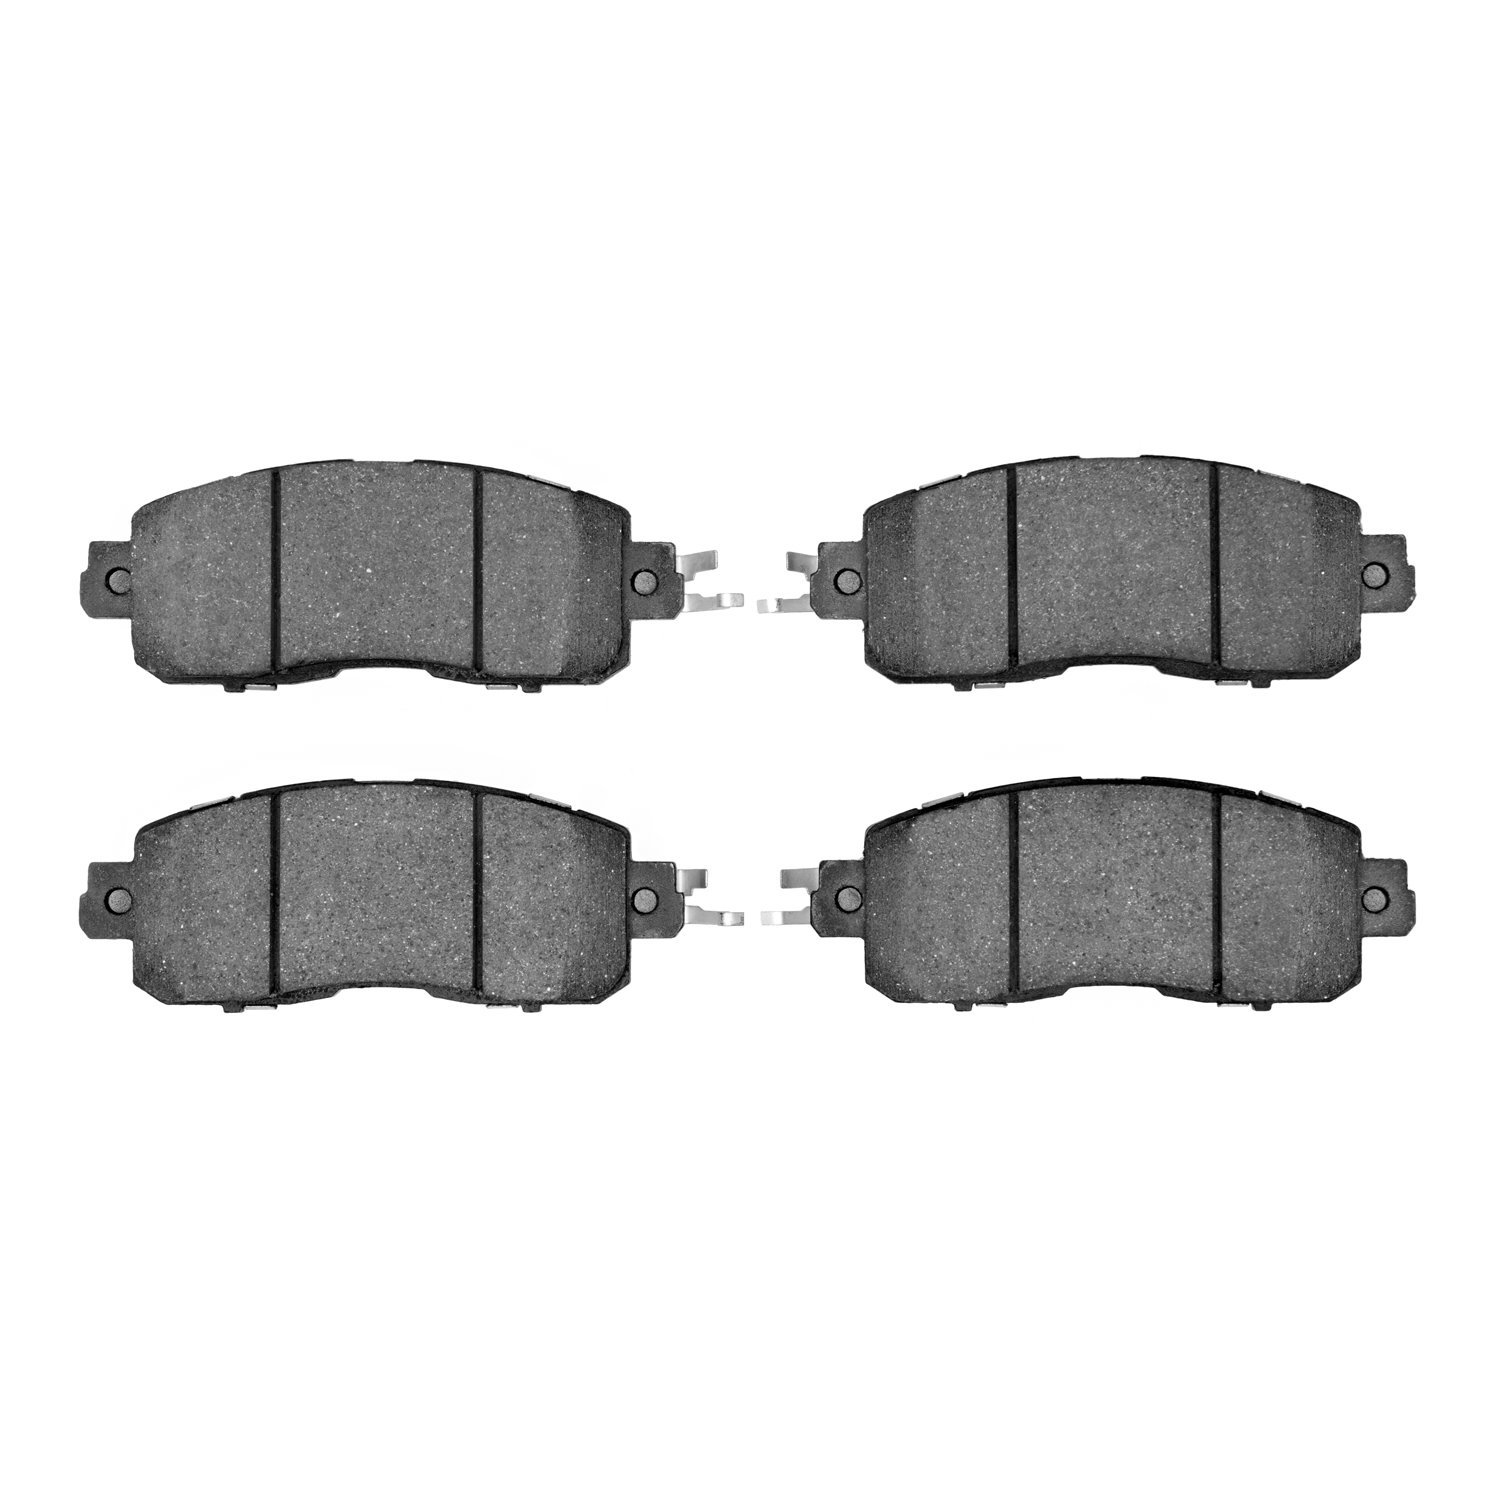 Optimum OE Brake Pads, Fits Select Infiniti/Nissan, Position: Front